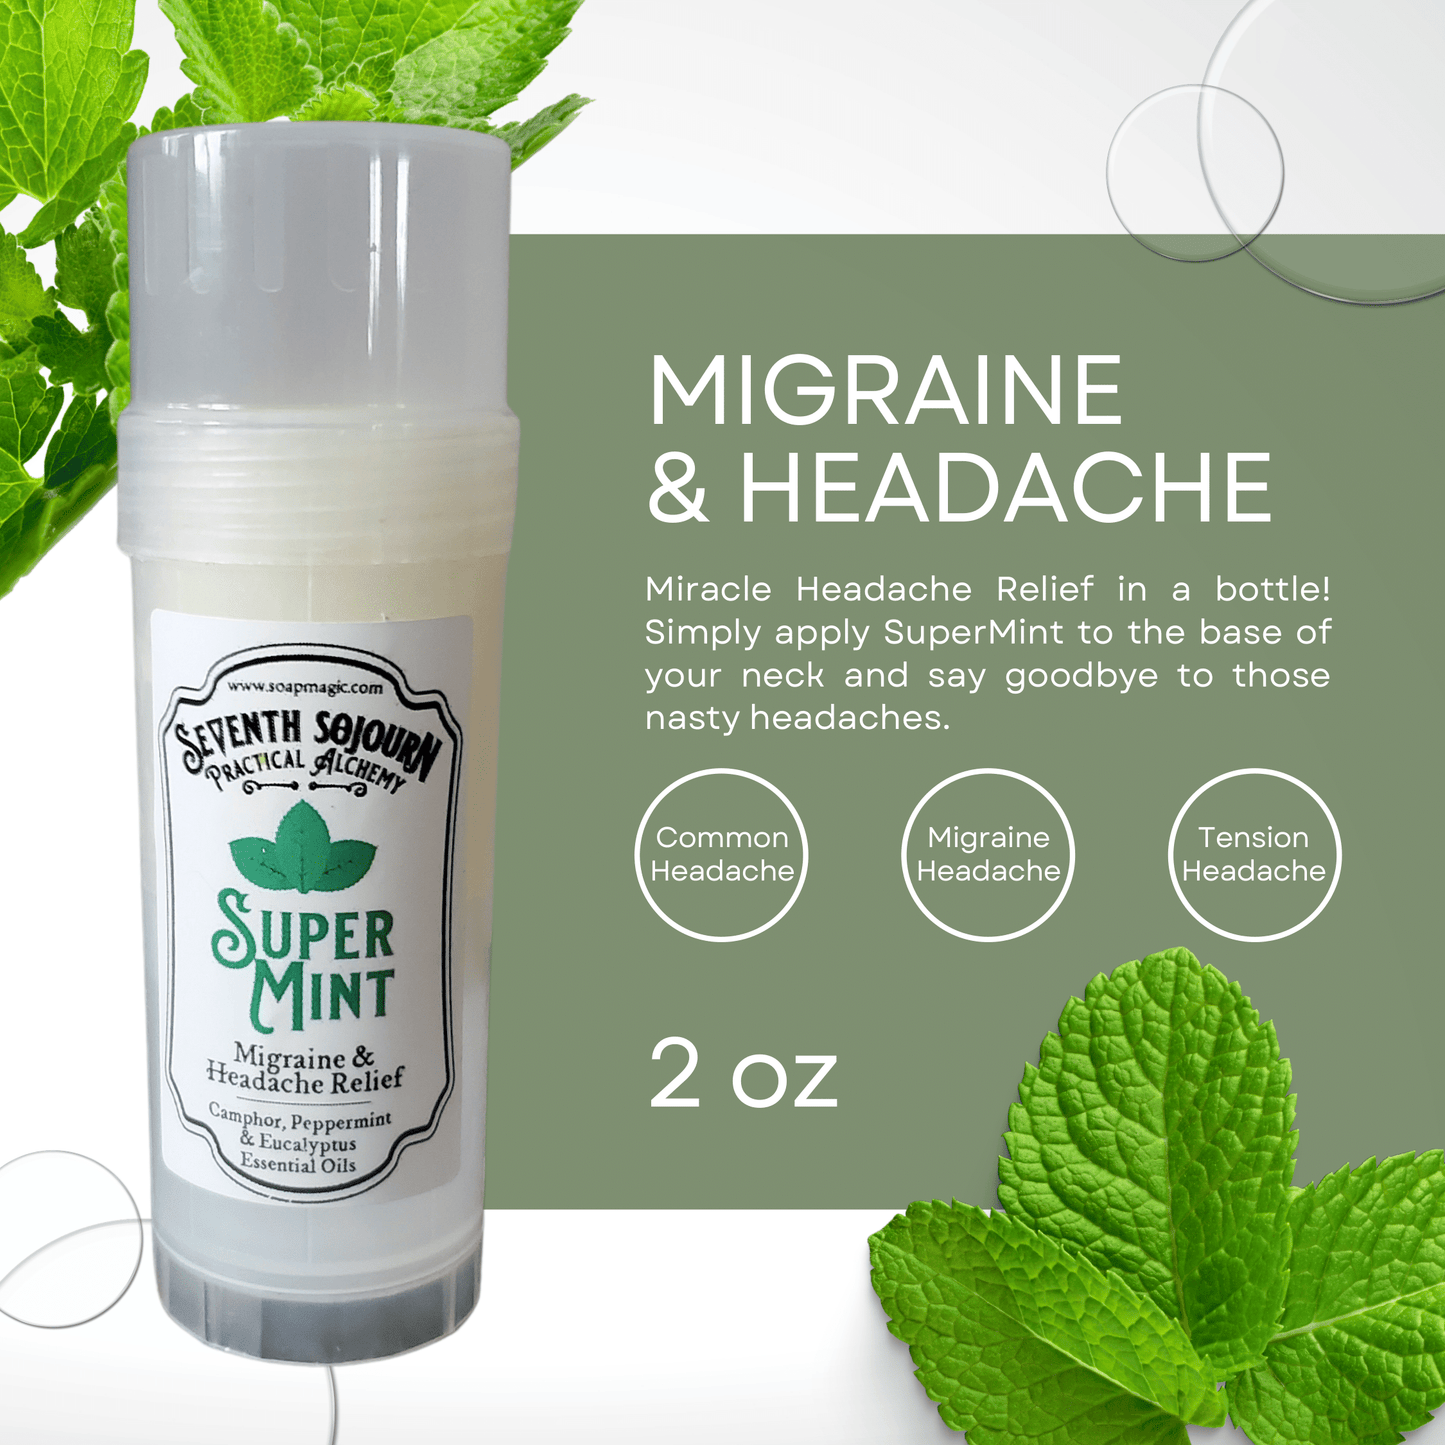 Super Mint - Migraine & Headache Relief